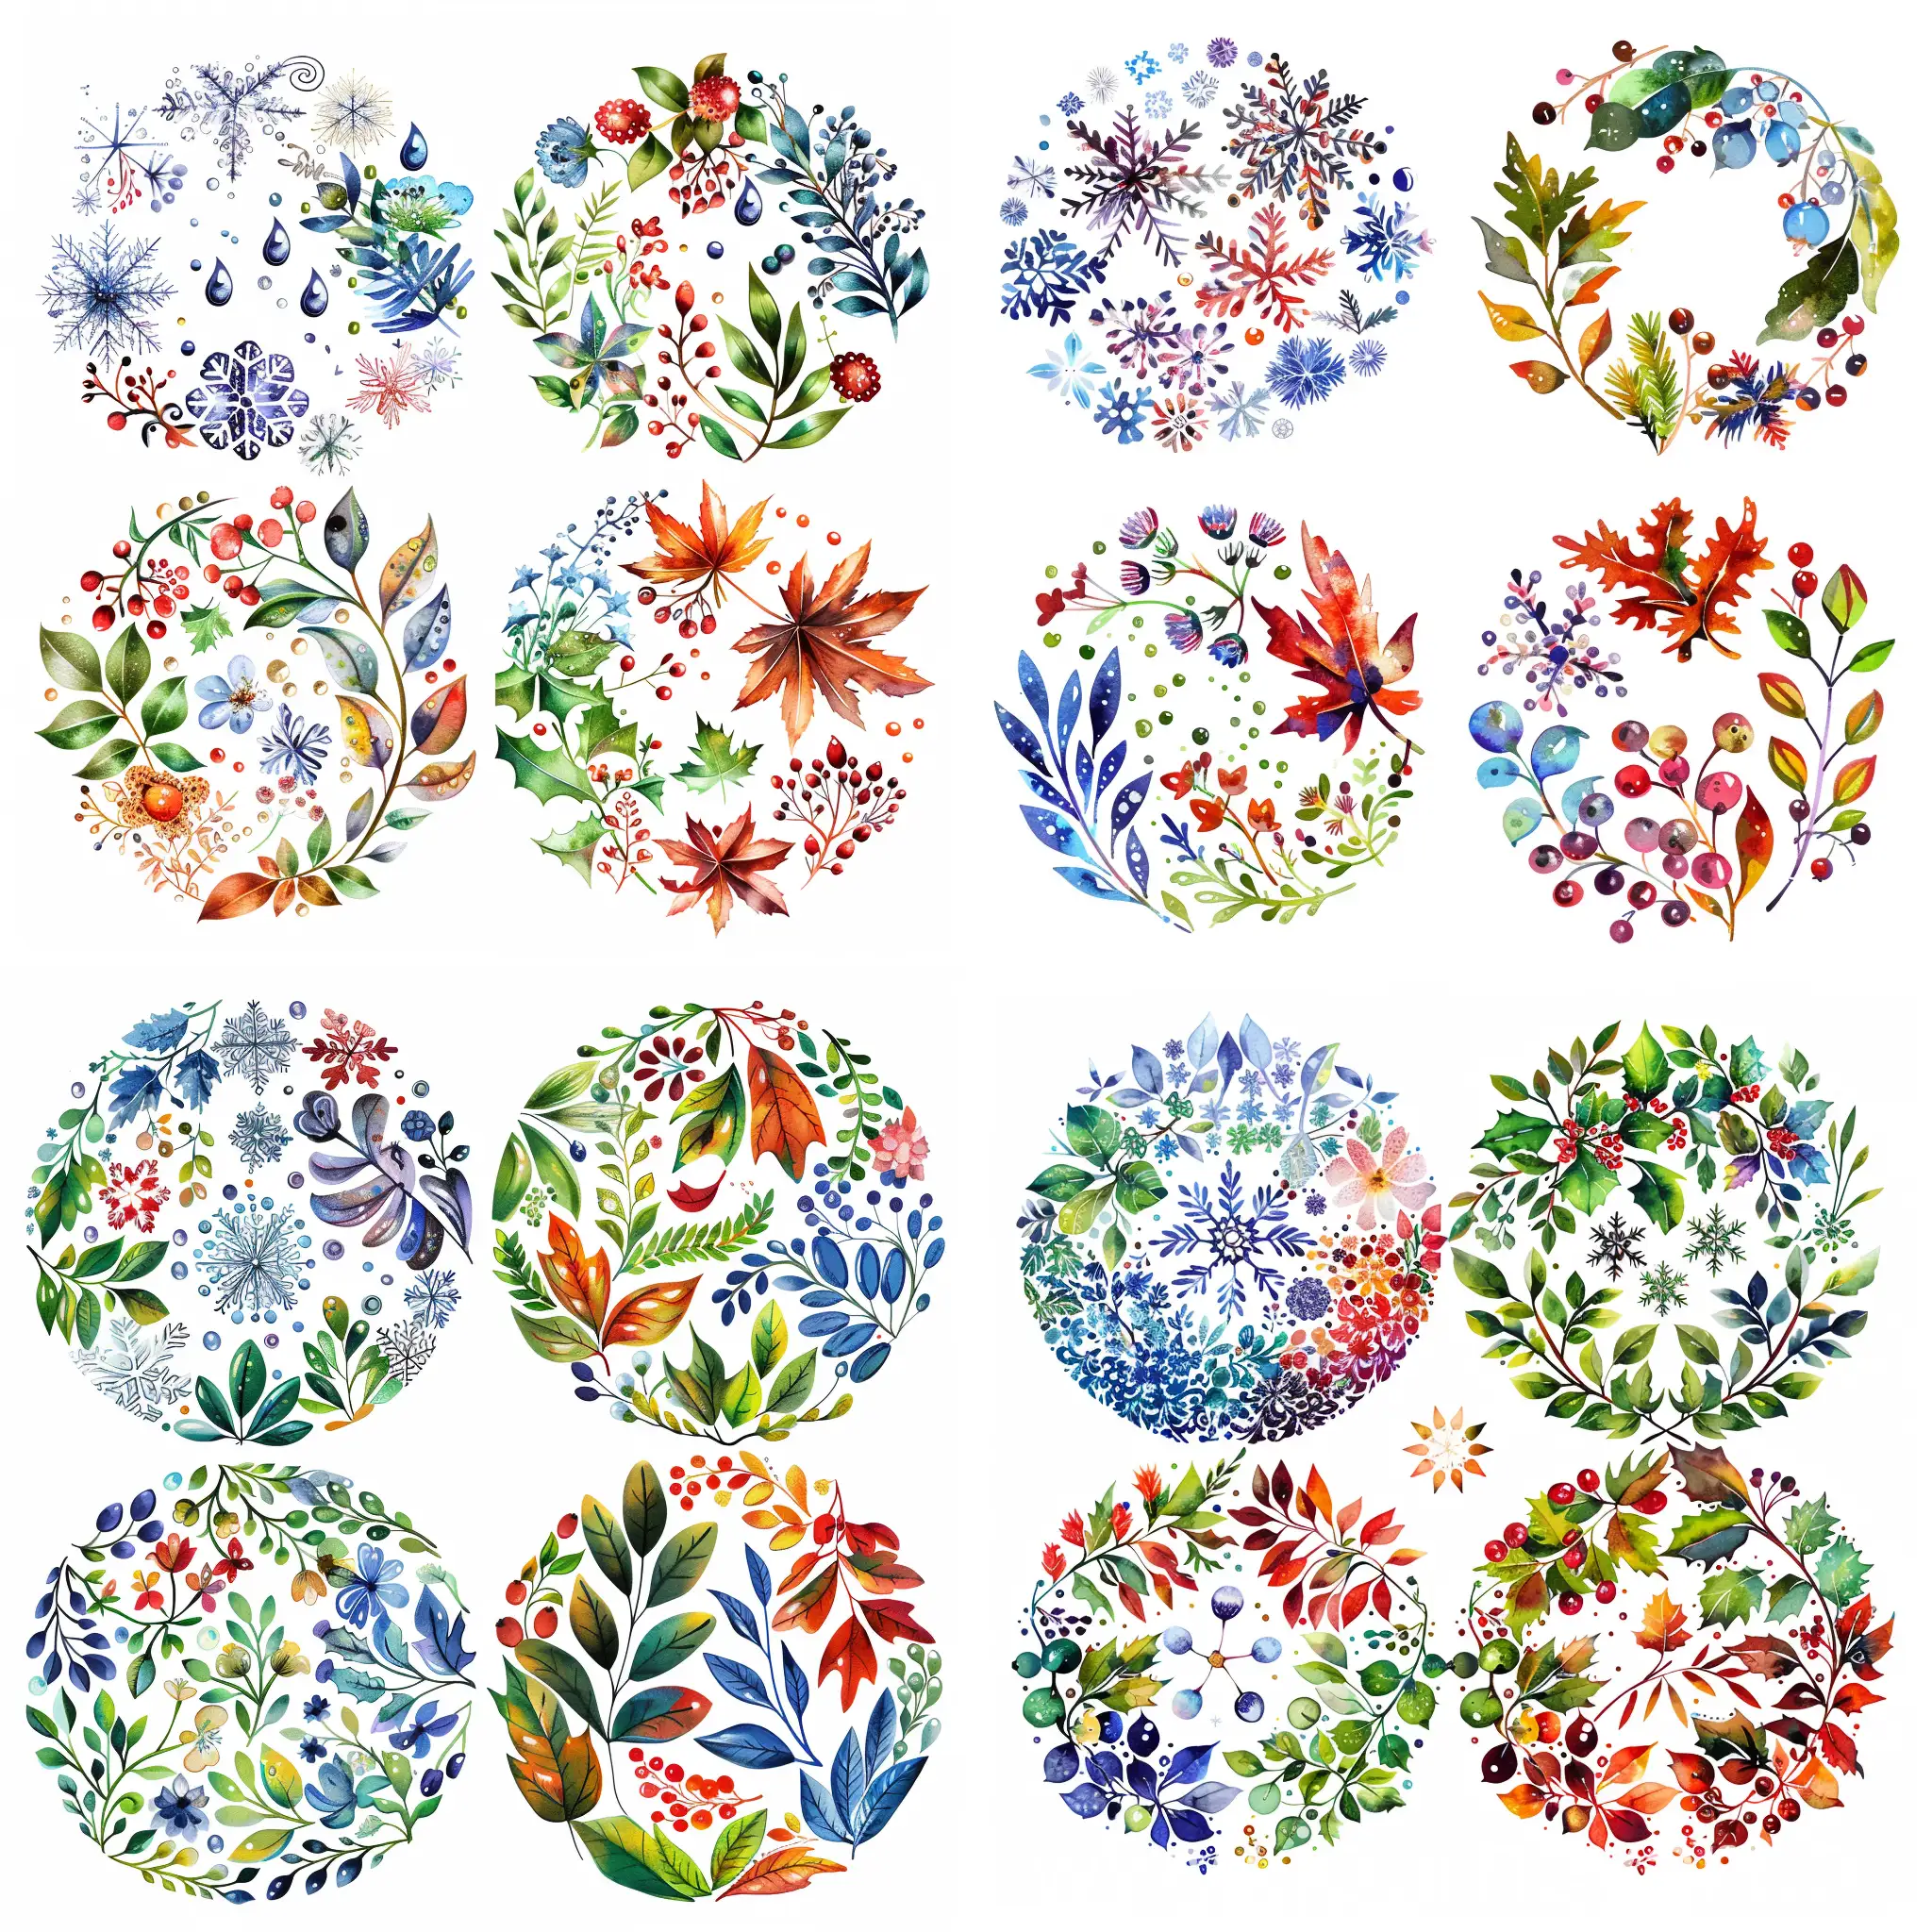 Seasonal-Ornamental-Round-Vector-Illustrations-on-White-Background